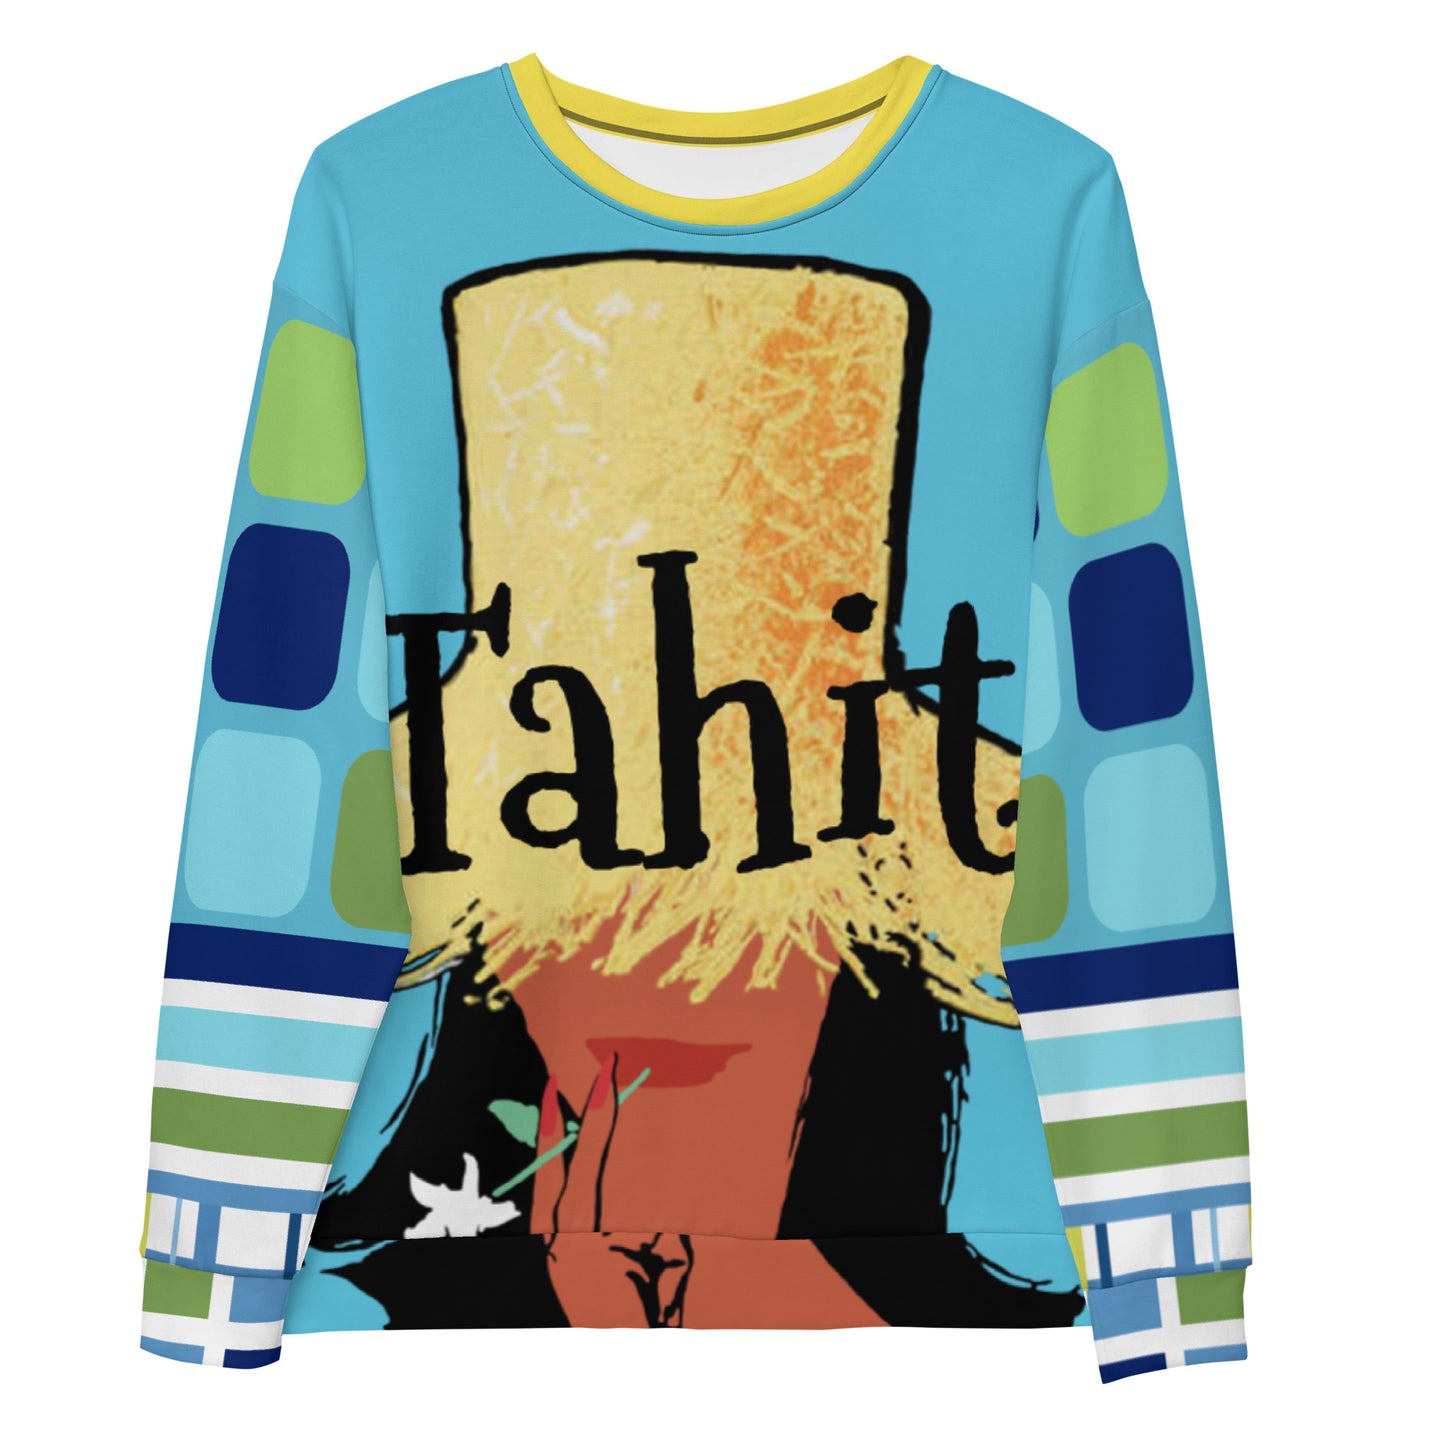 Tahiti Girl Bright Lights Unisex Sweatshirt